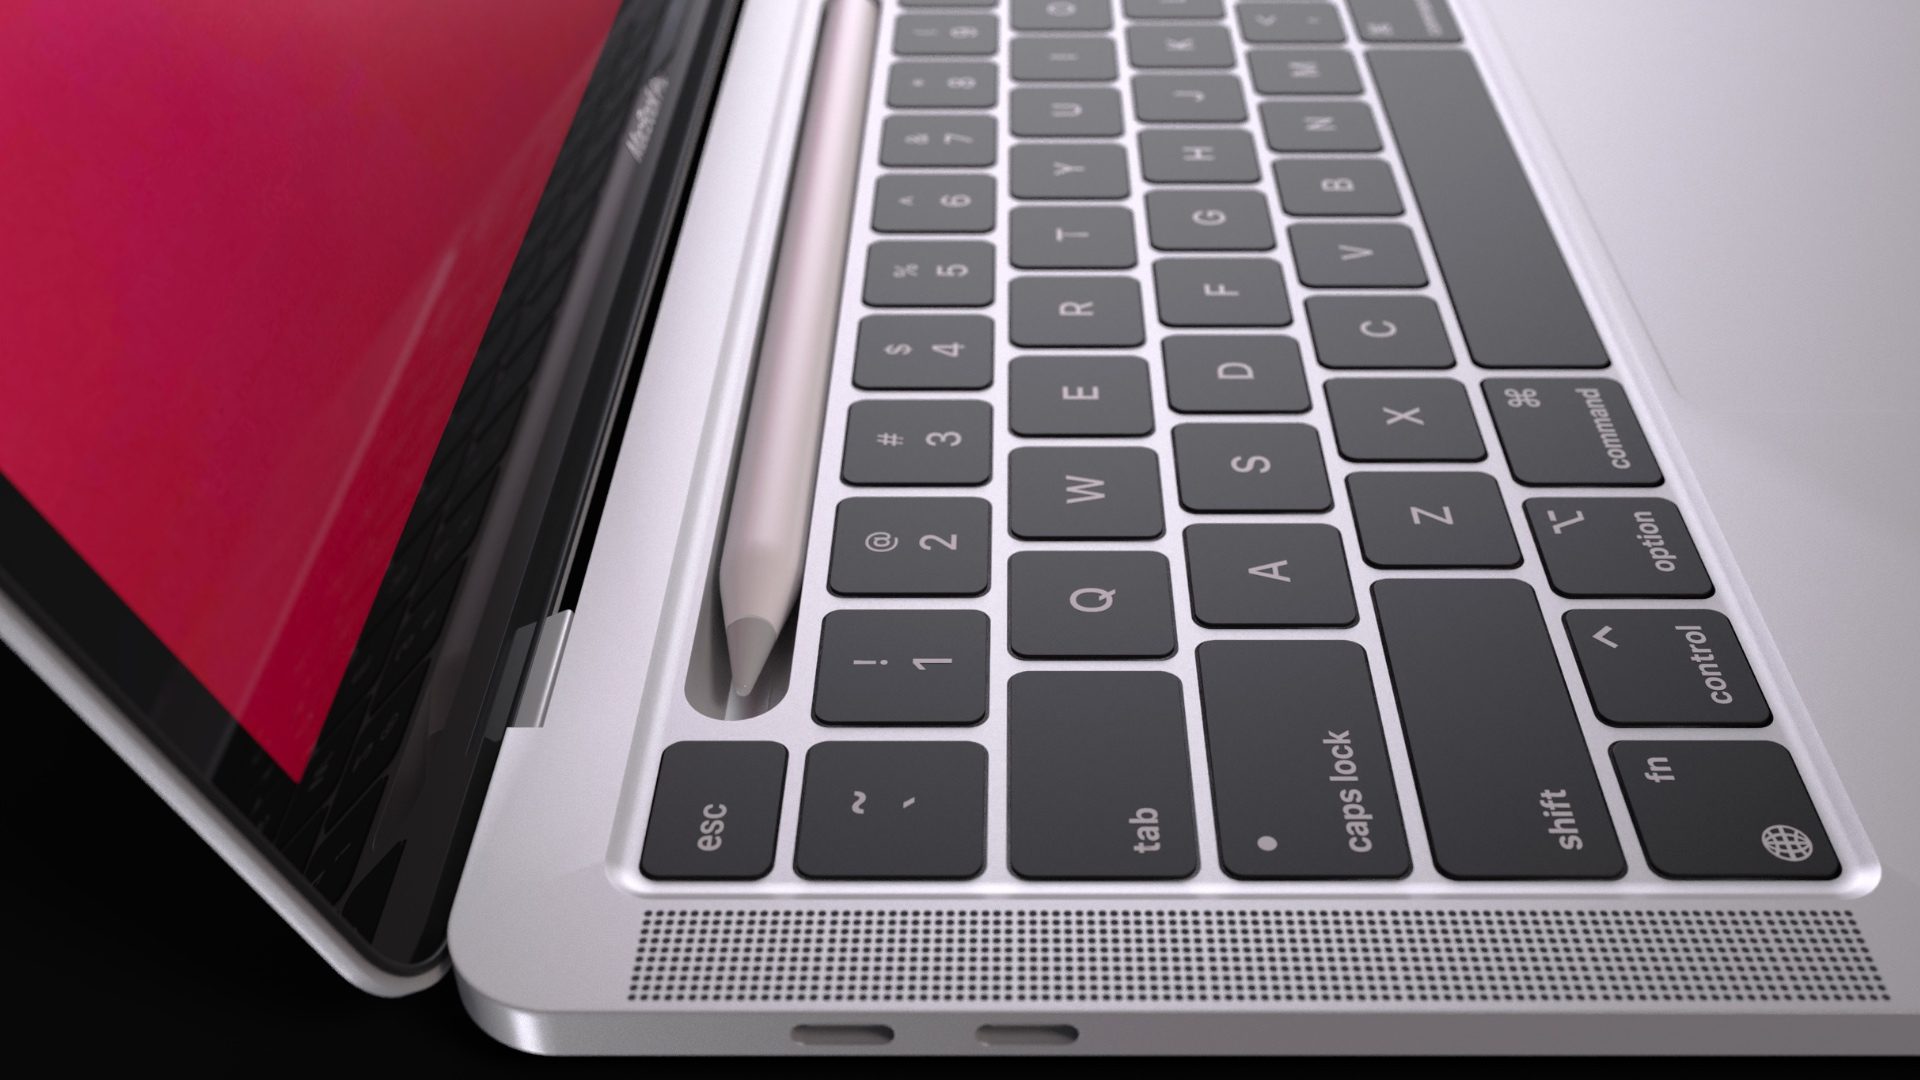 macbook-pro-apple-pencil-concept-9to5mac-3.jpg